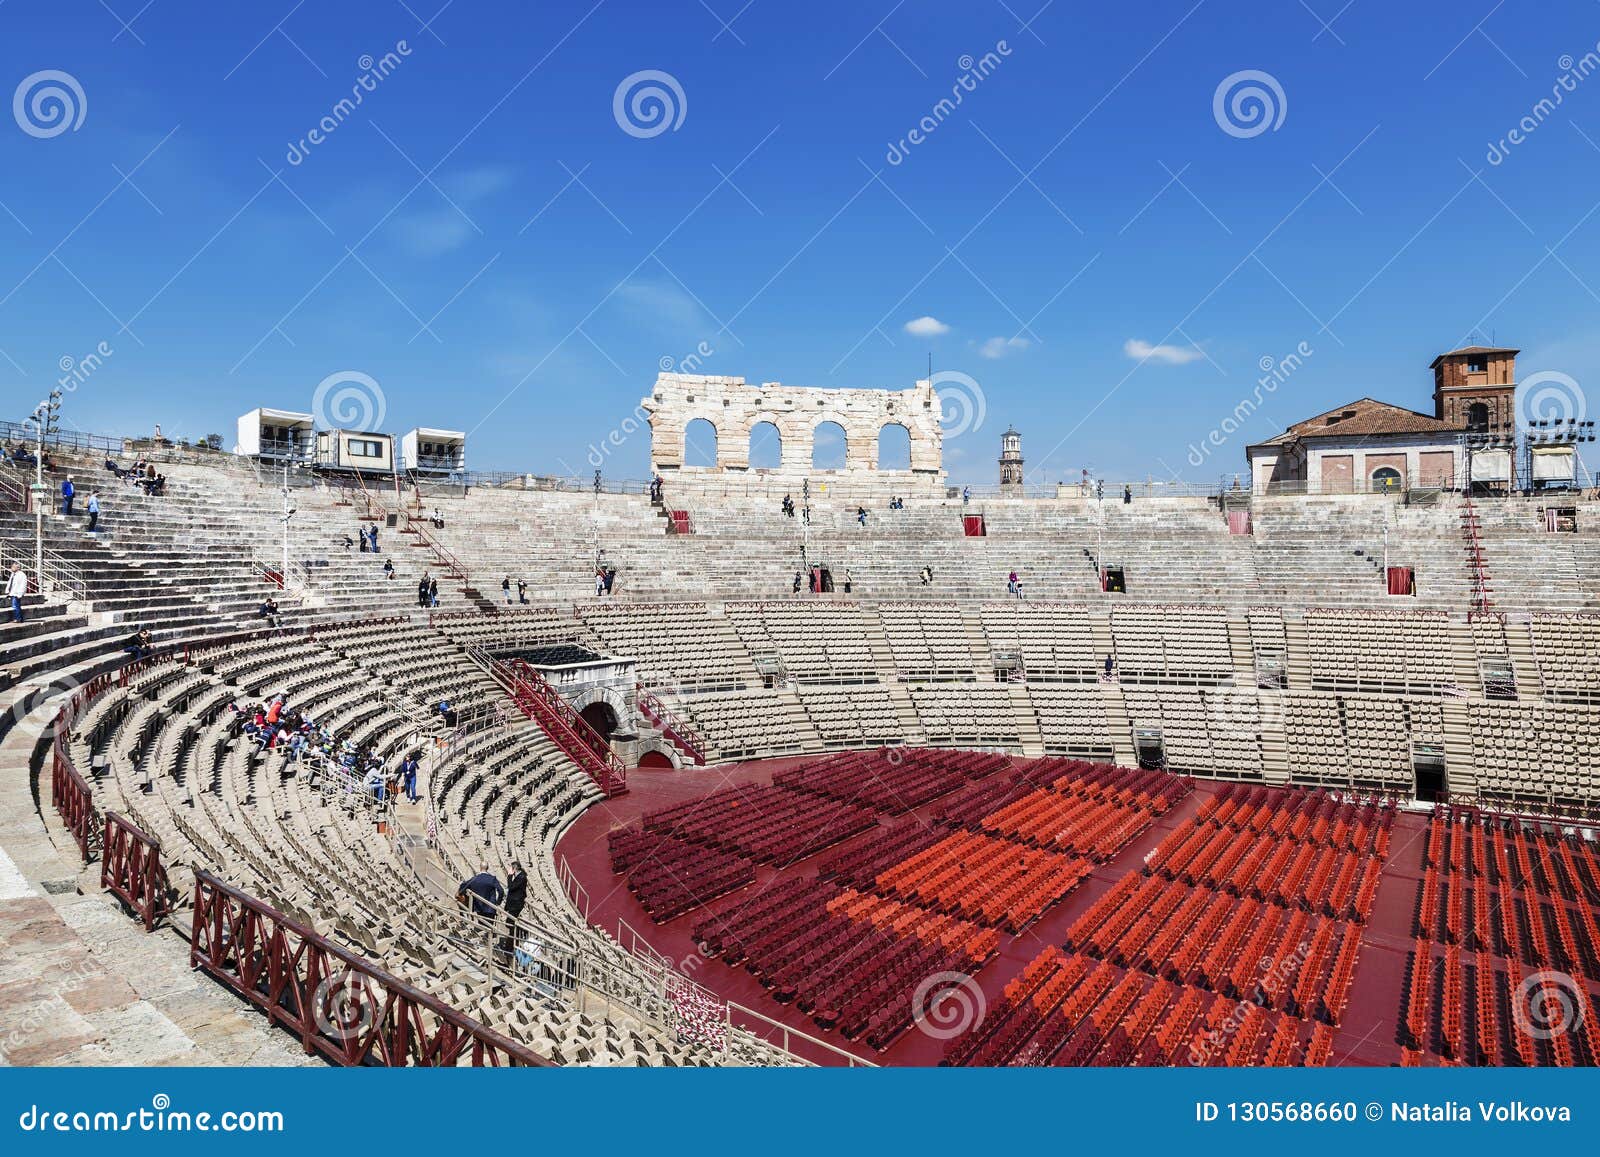 Arena Di Verona Ancient Roman Amphitheatre In Verona Stock Photo Image Of Antique Cavea 130568660